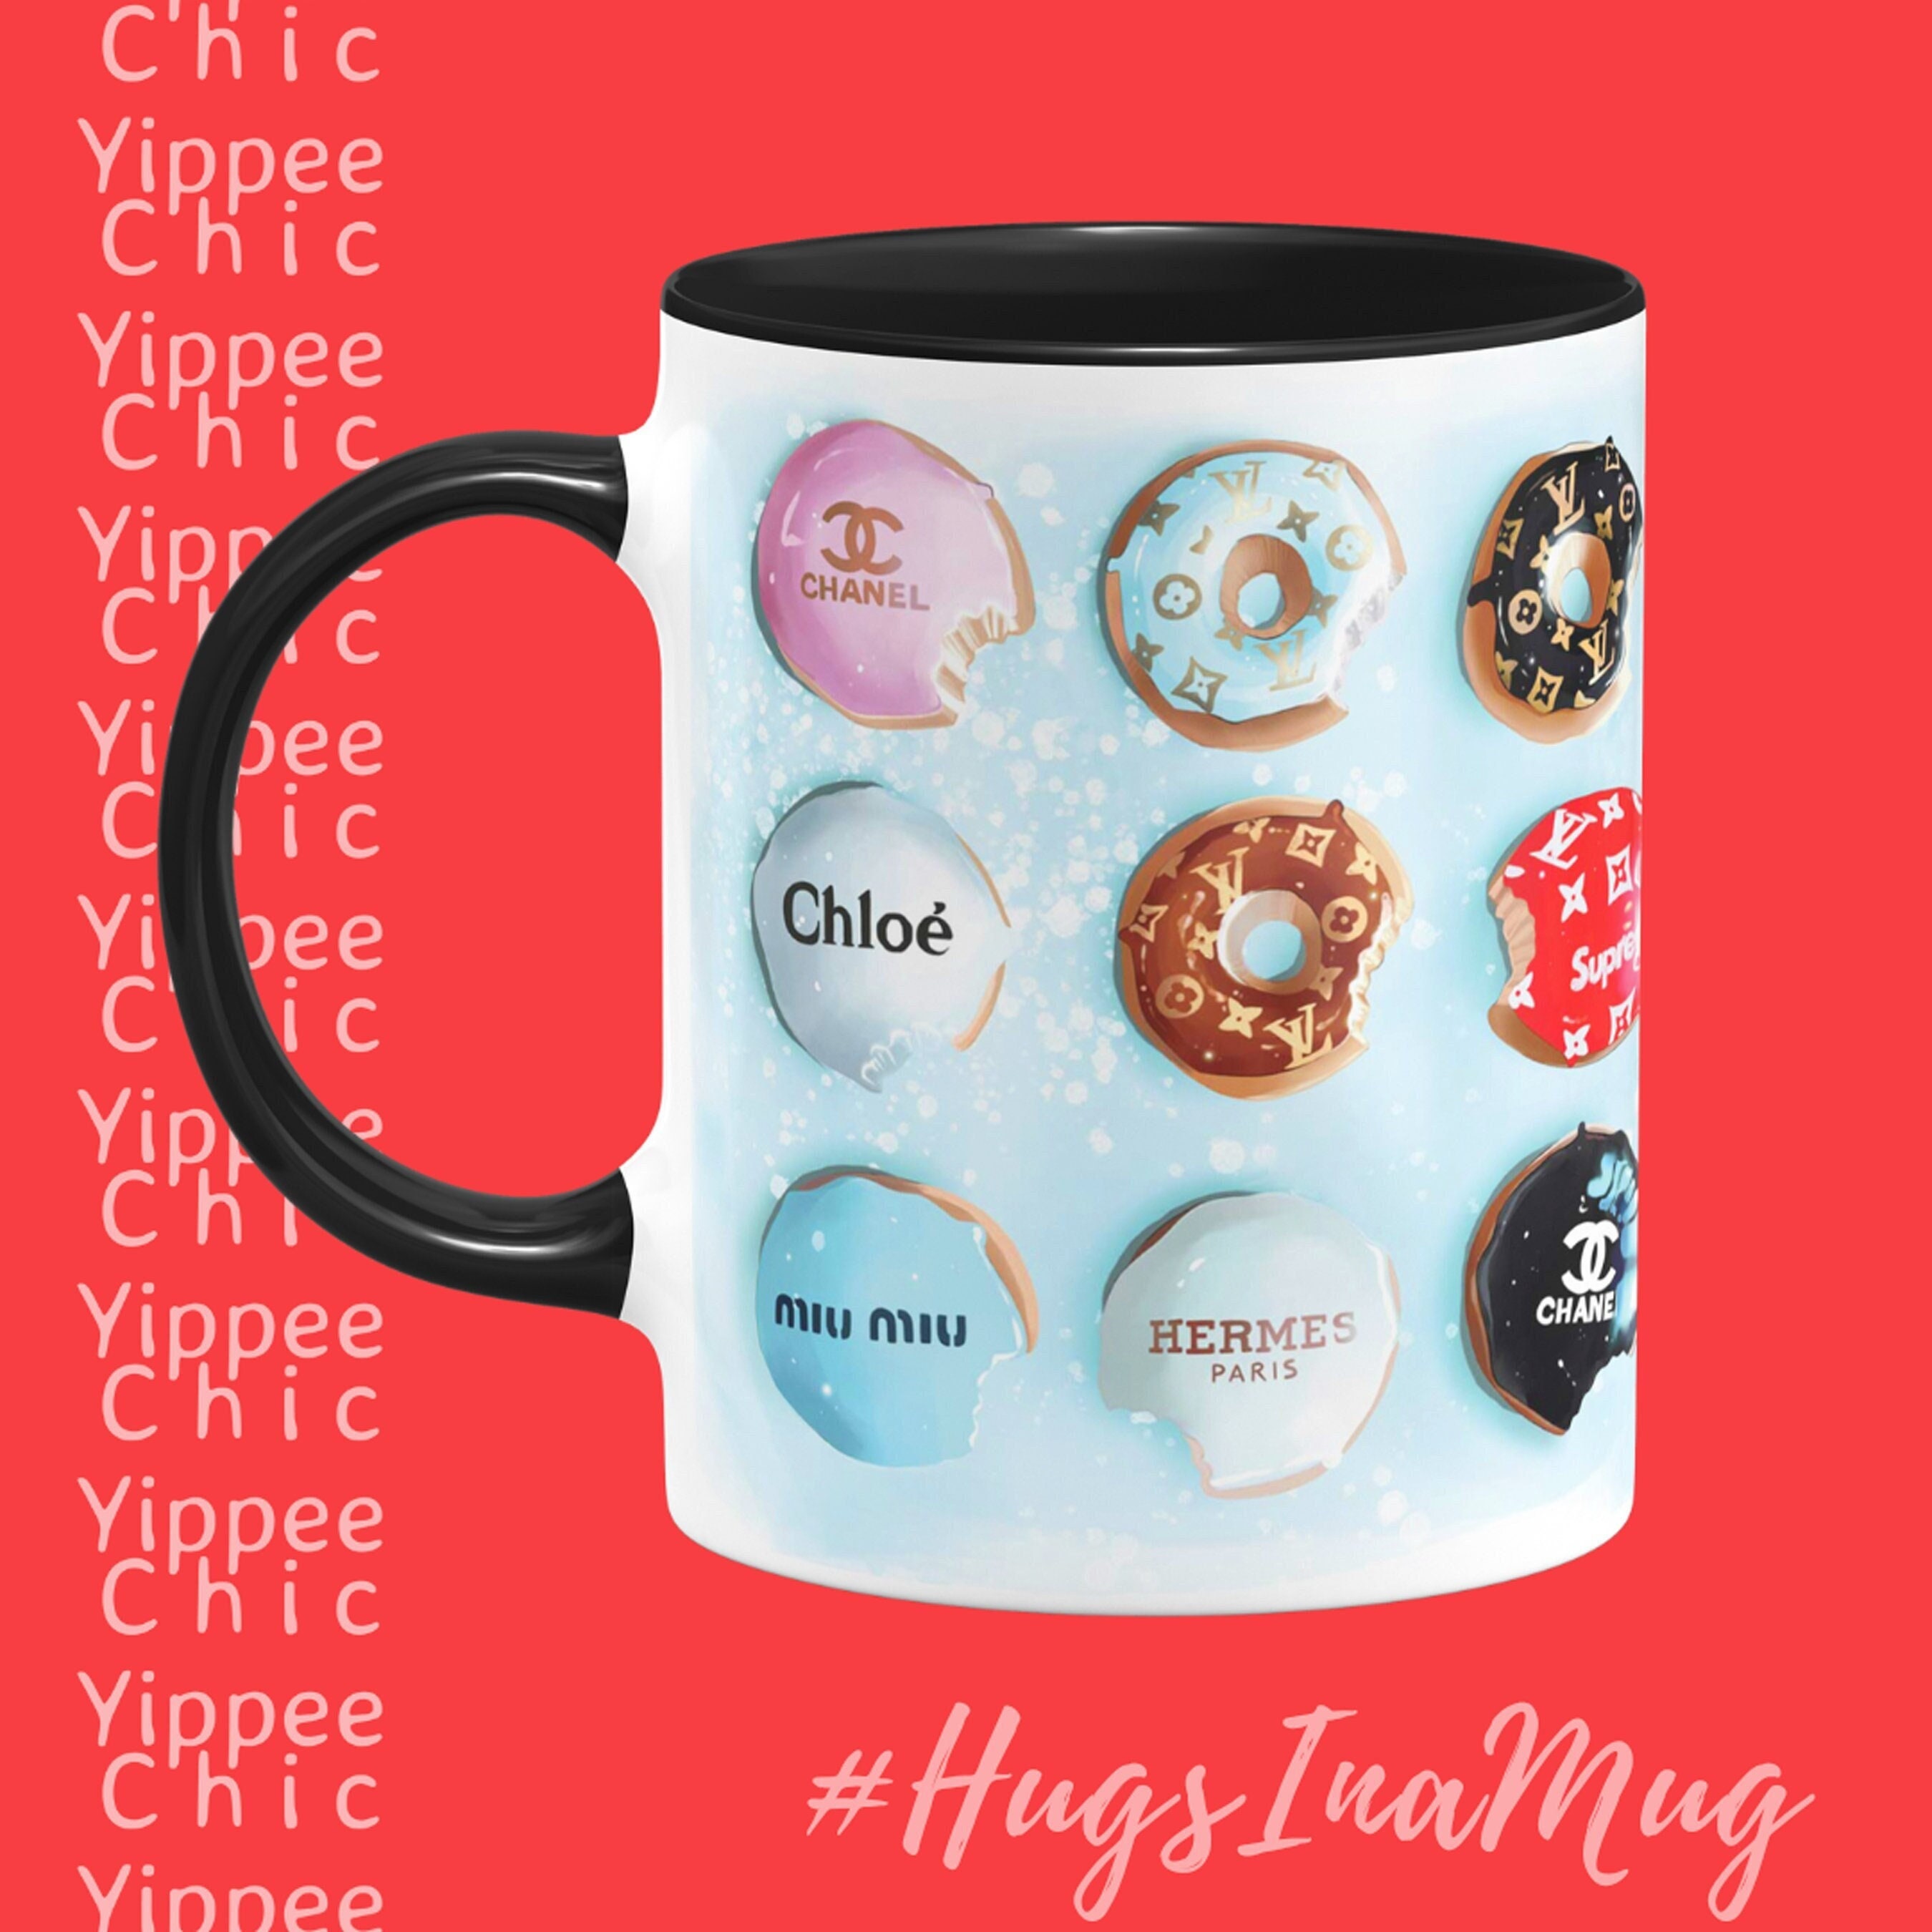 CoCo Chanel. I want this mug.